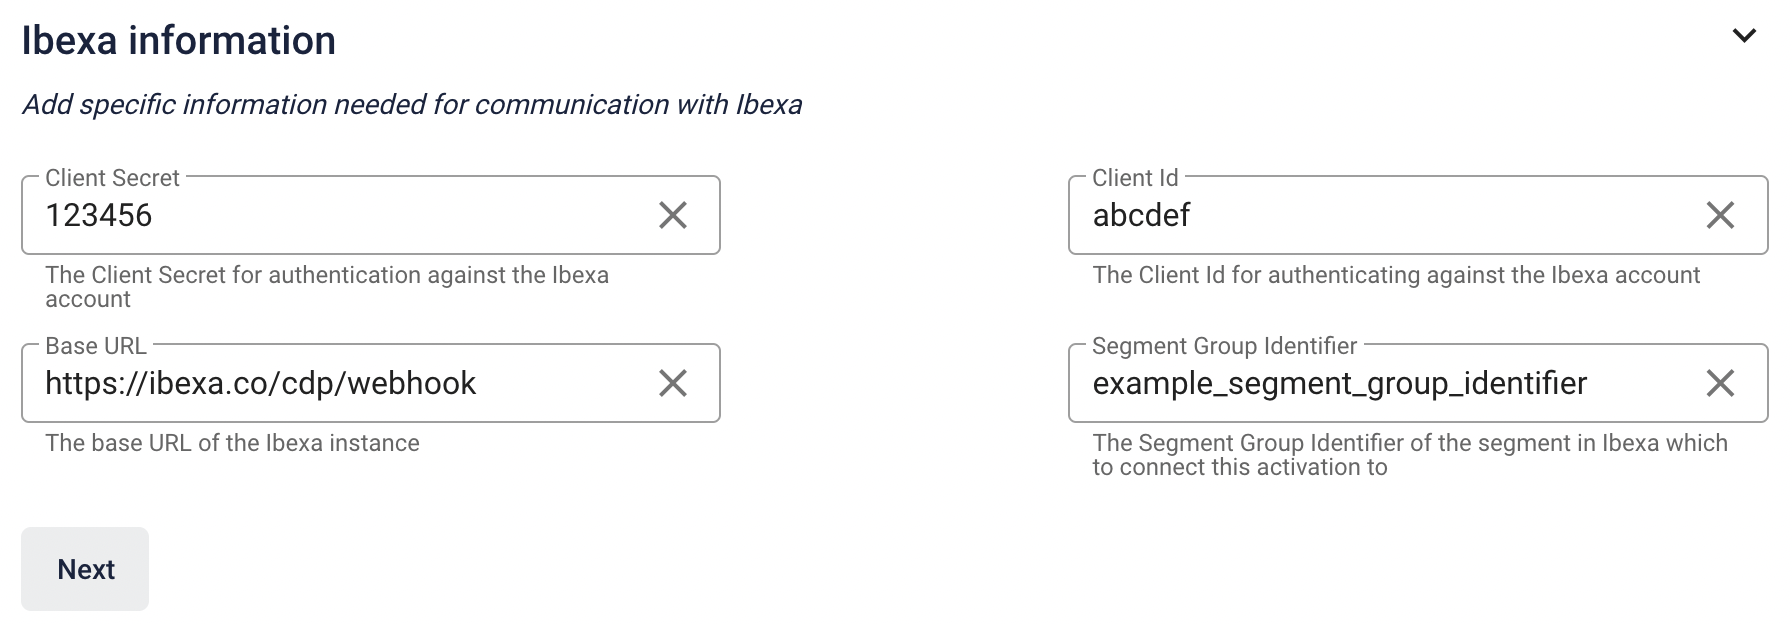 Ibexa Information - Activation